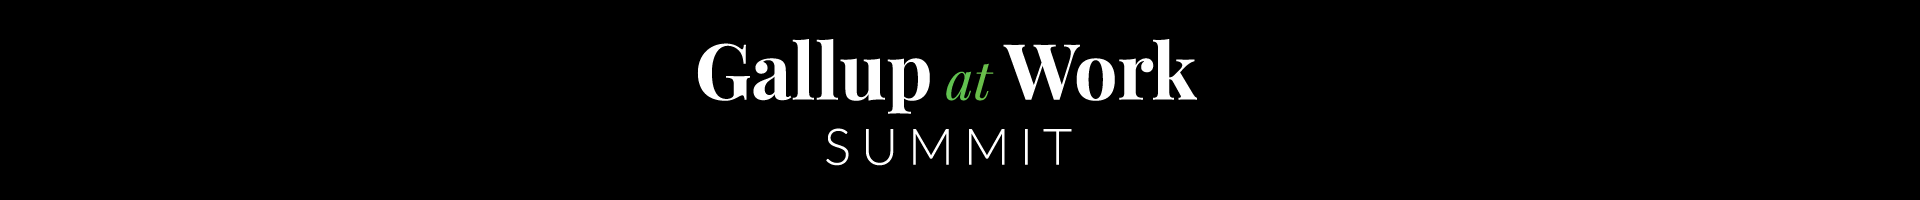 2019 Gallup at Work Summit Event Banner